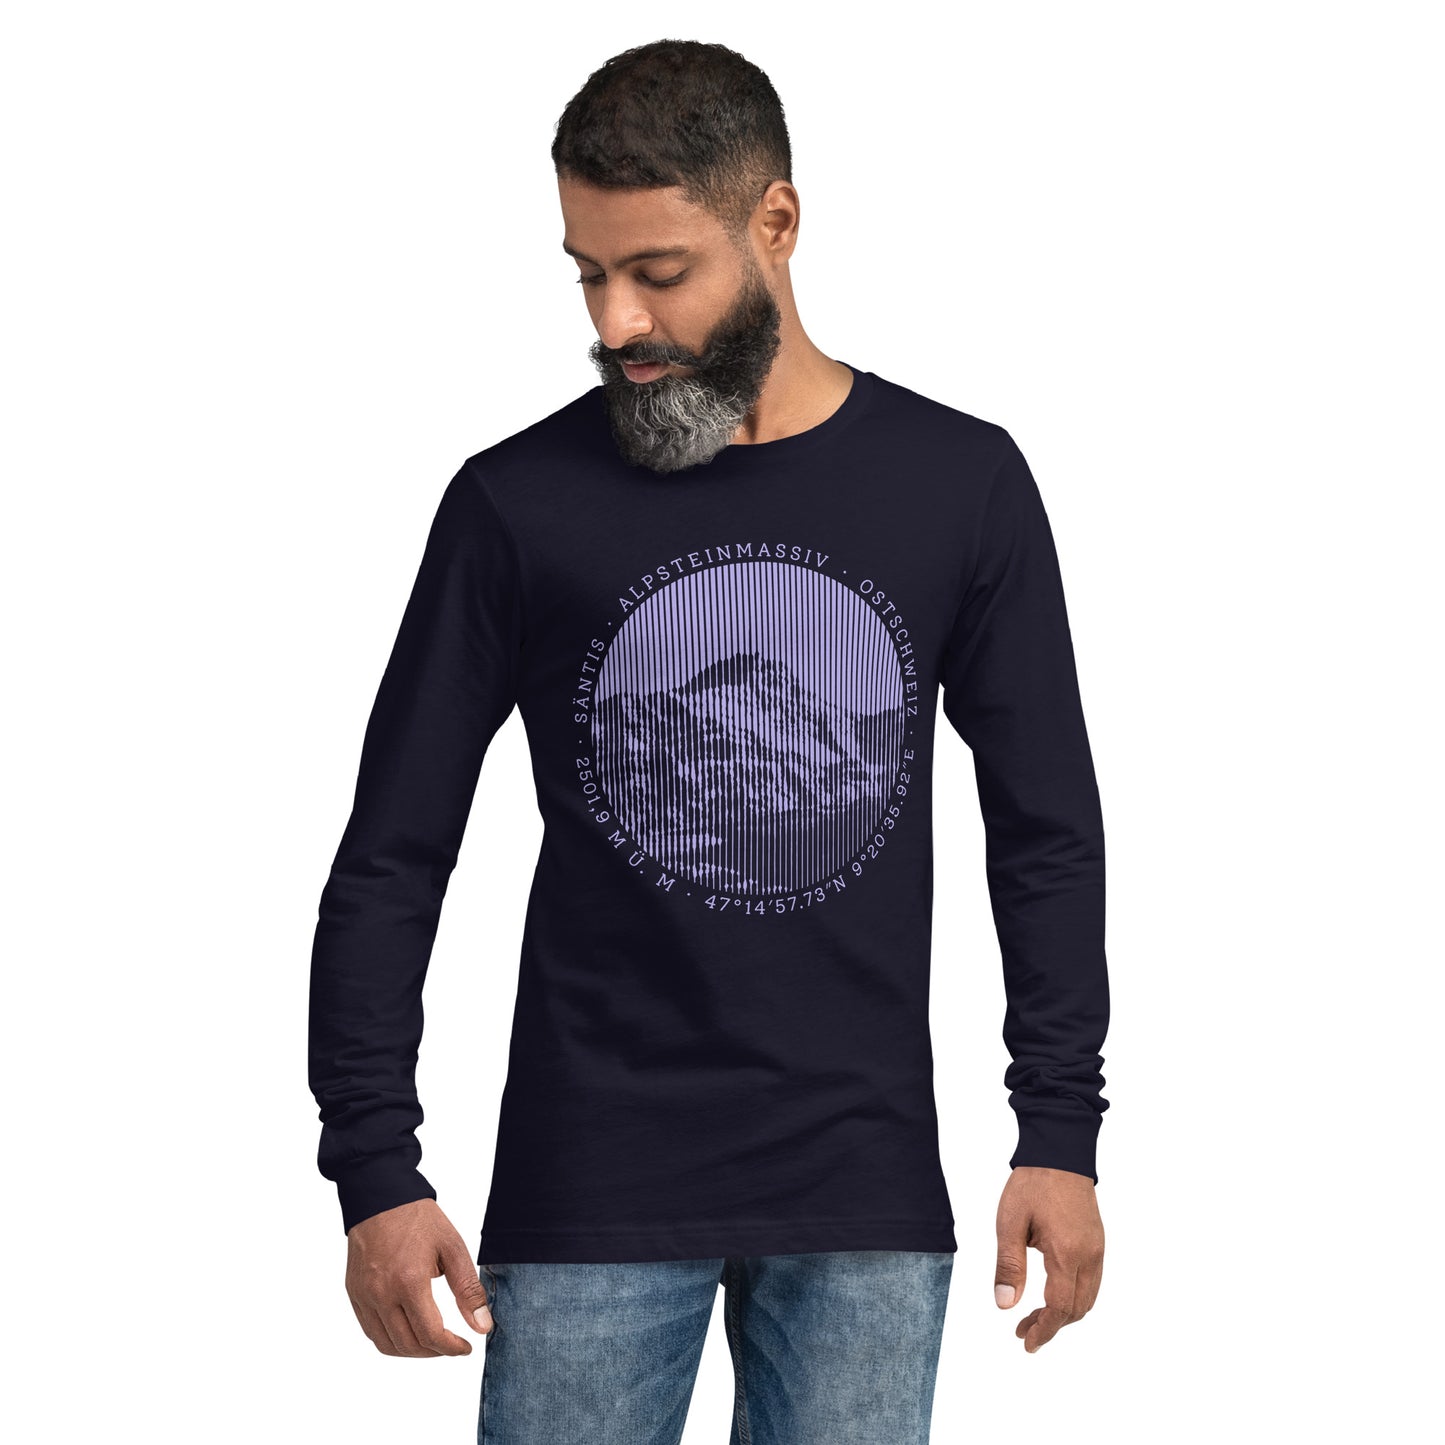 Herren-Langarm-T-Shirt Säntis, navyblau